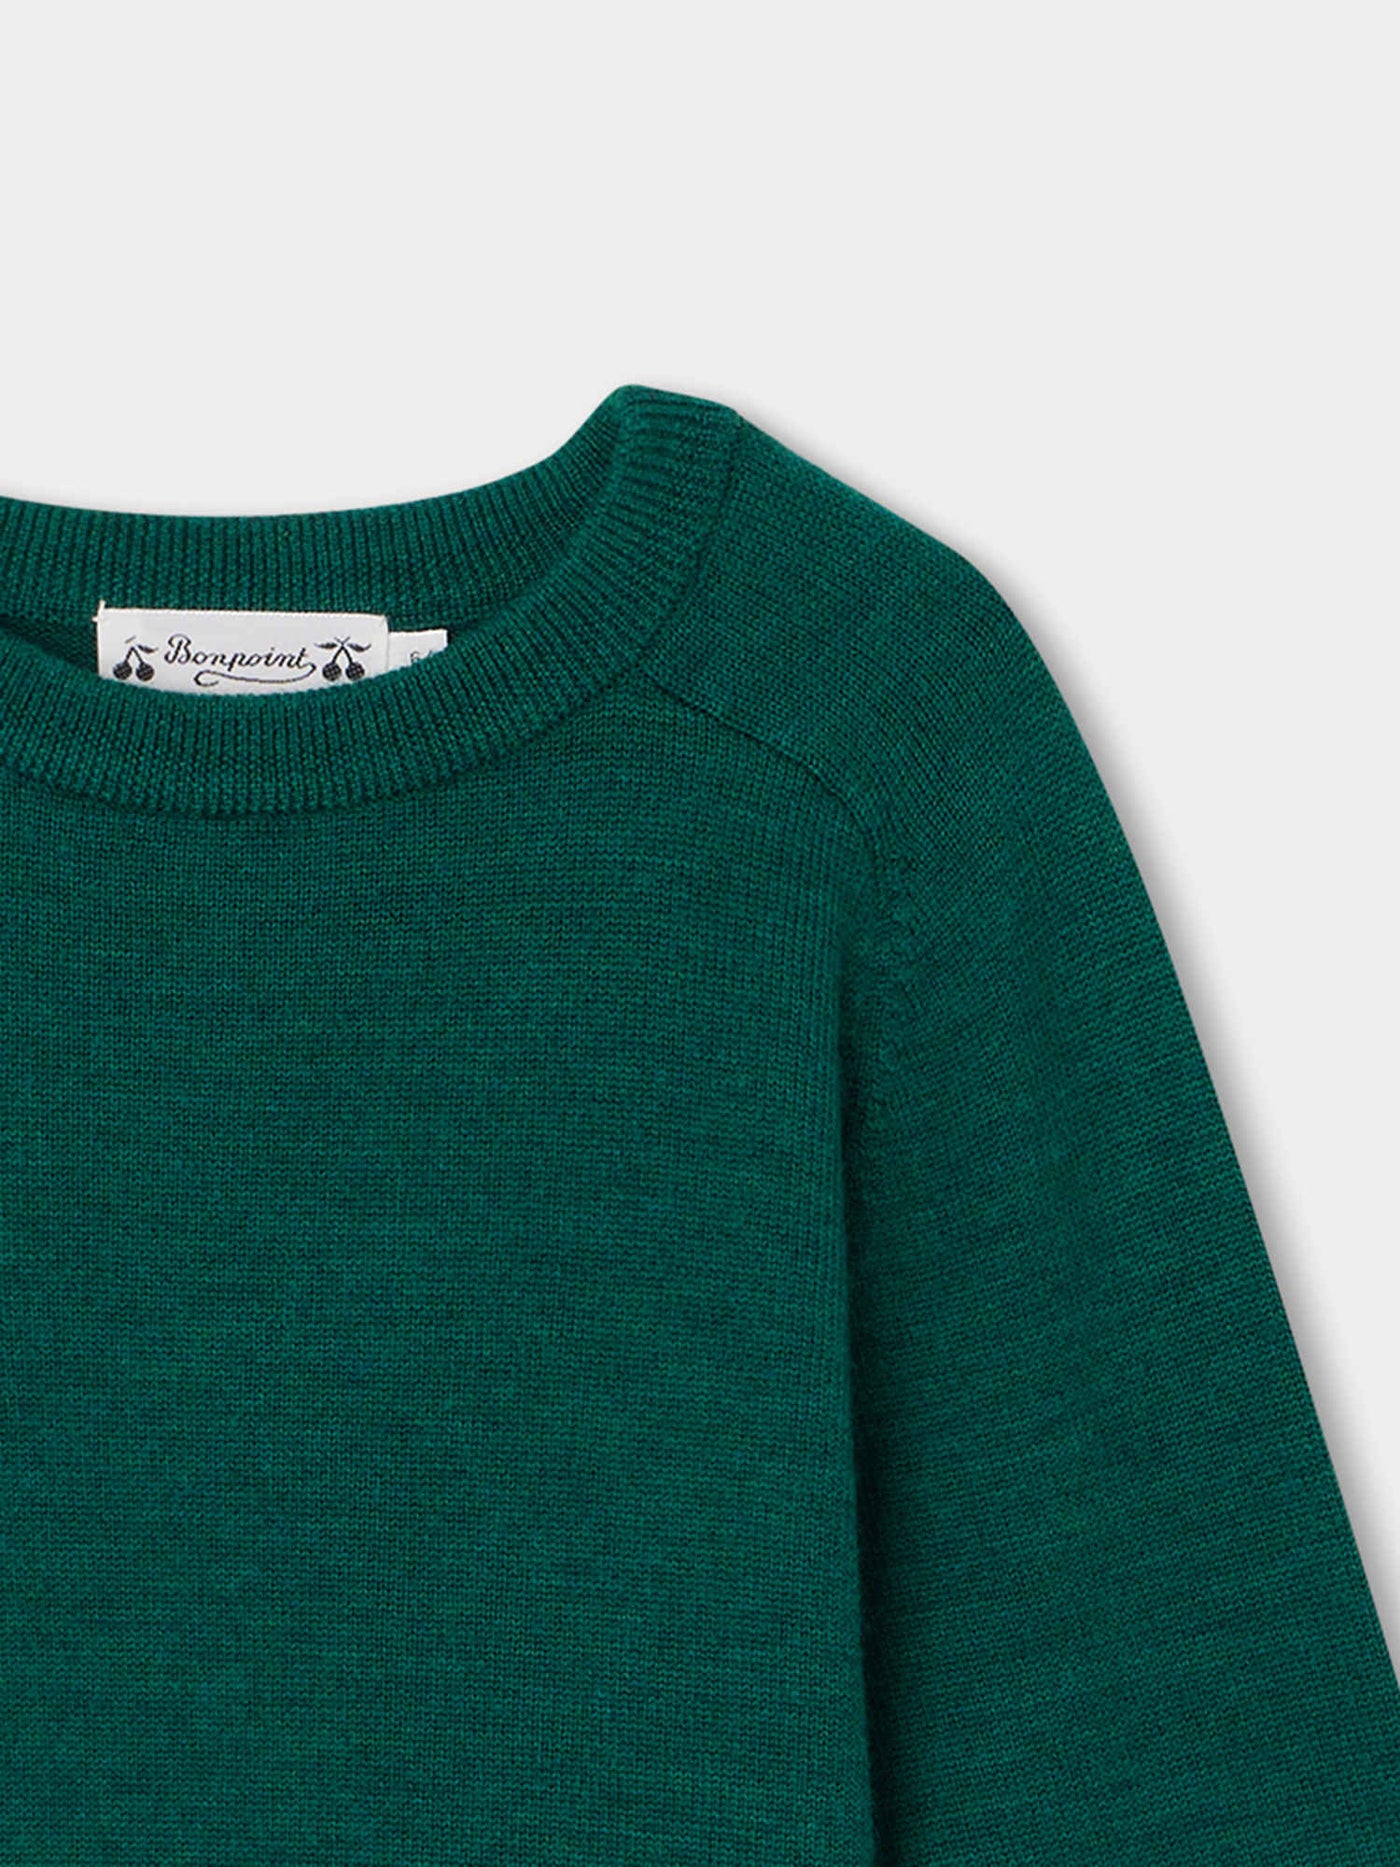 Bowen Sweater green